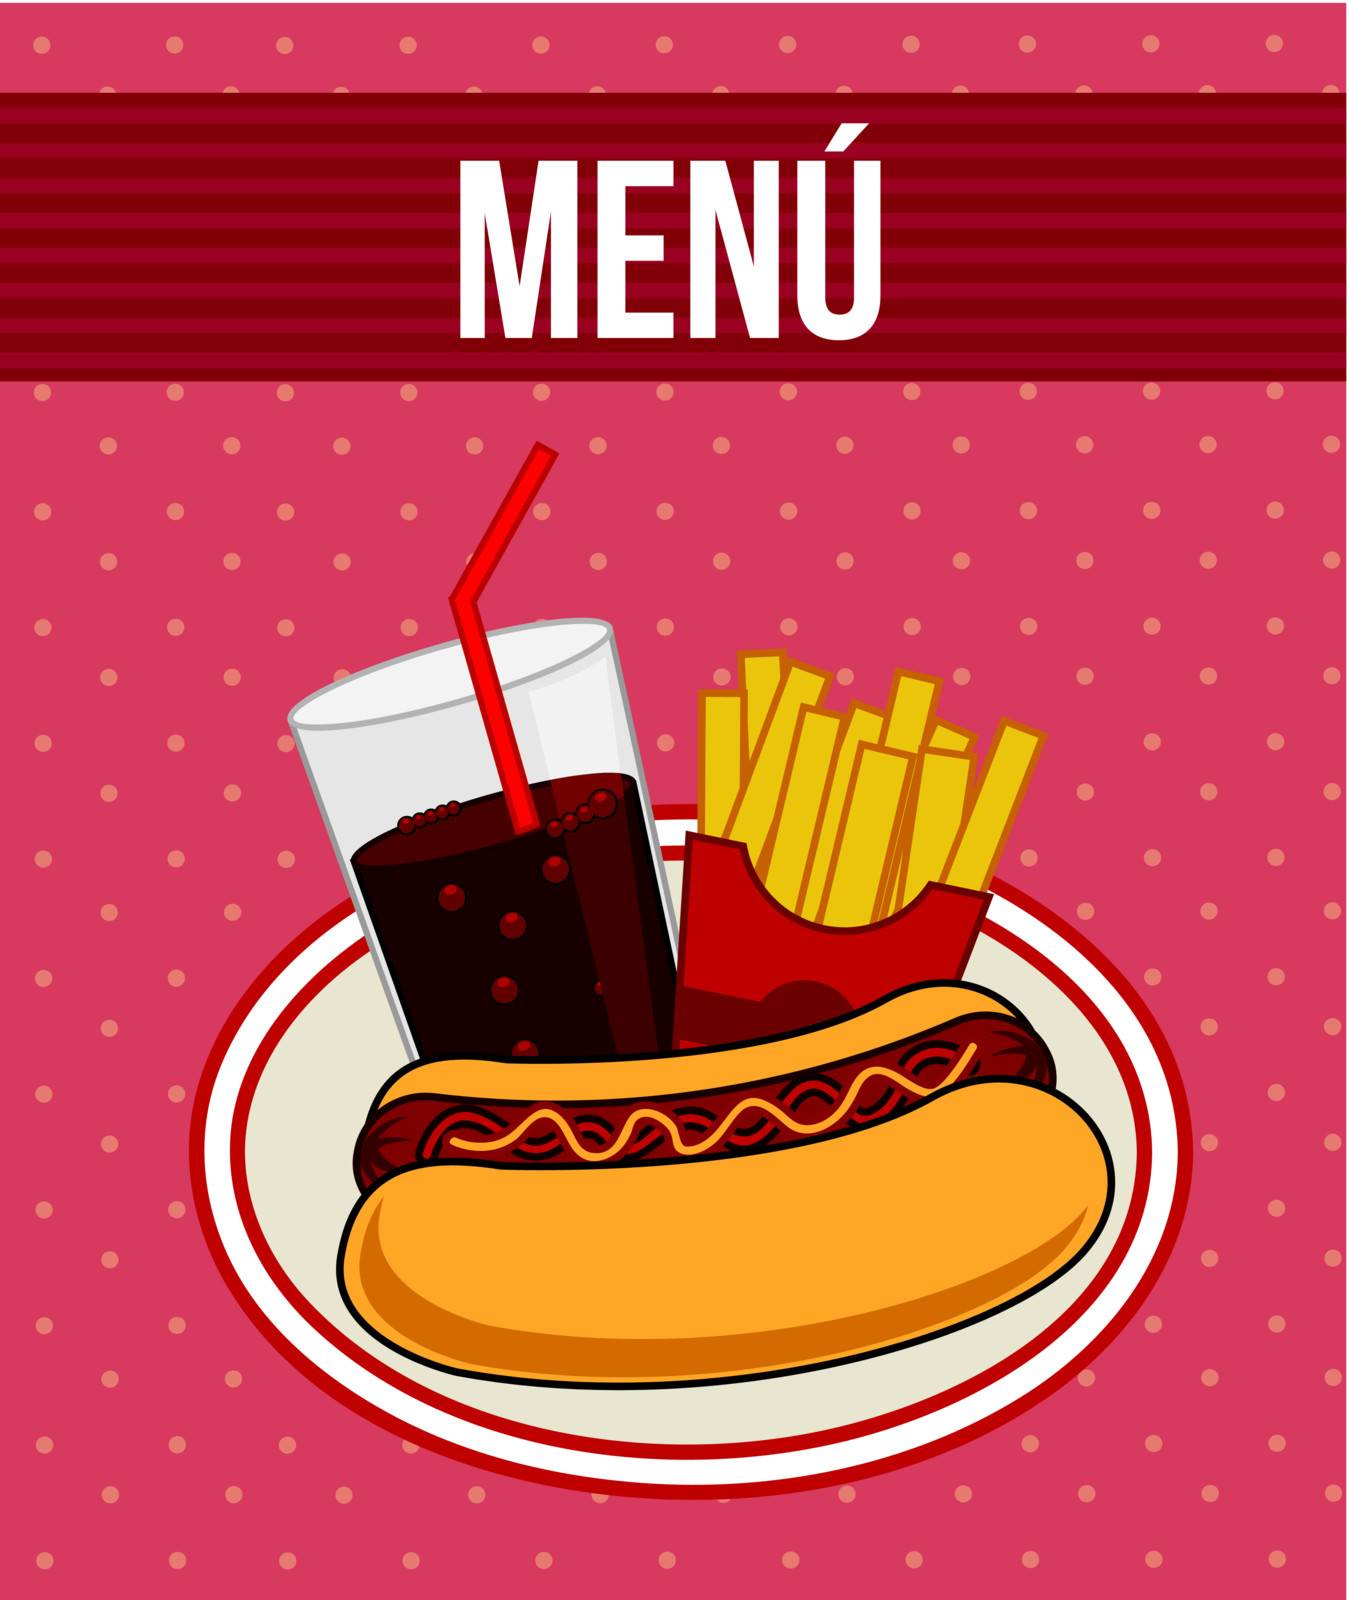 hot dog cartoon over red background. vector illustration